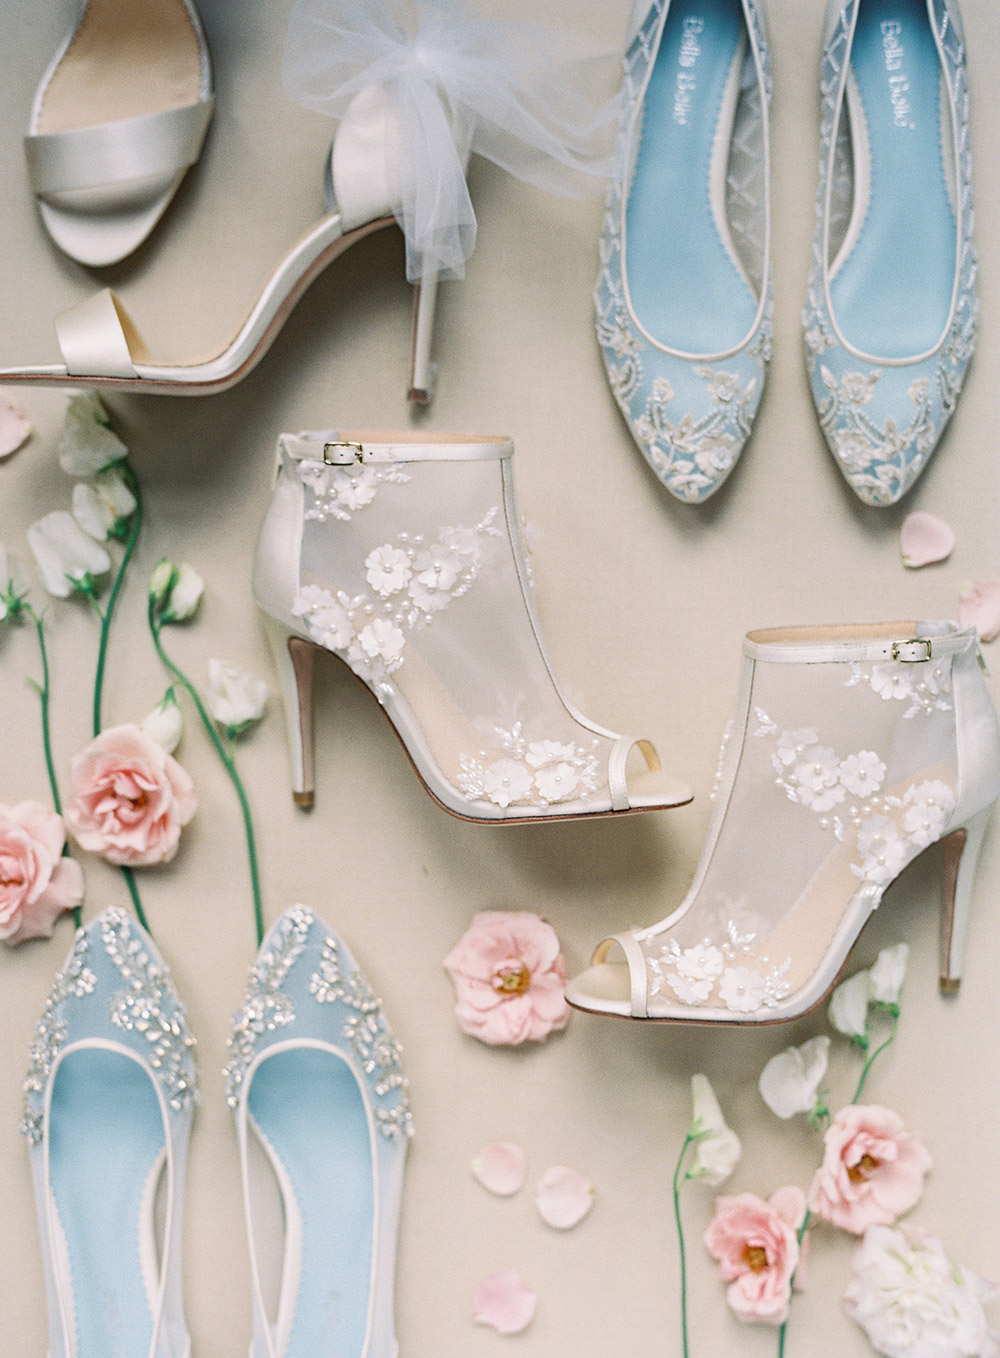 Bella Belle 2017 Bridal Shoes Collection. www.theweddingnotebook.com